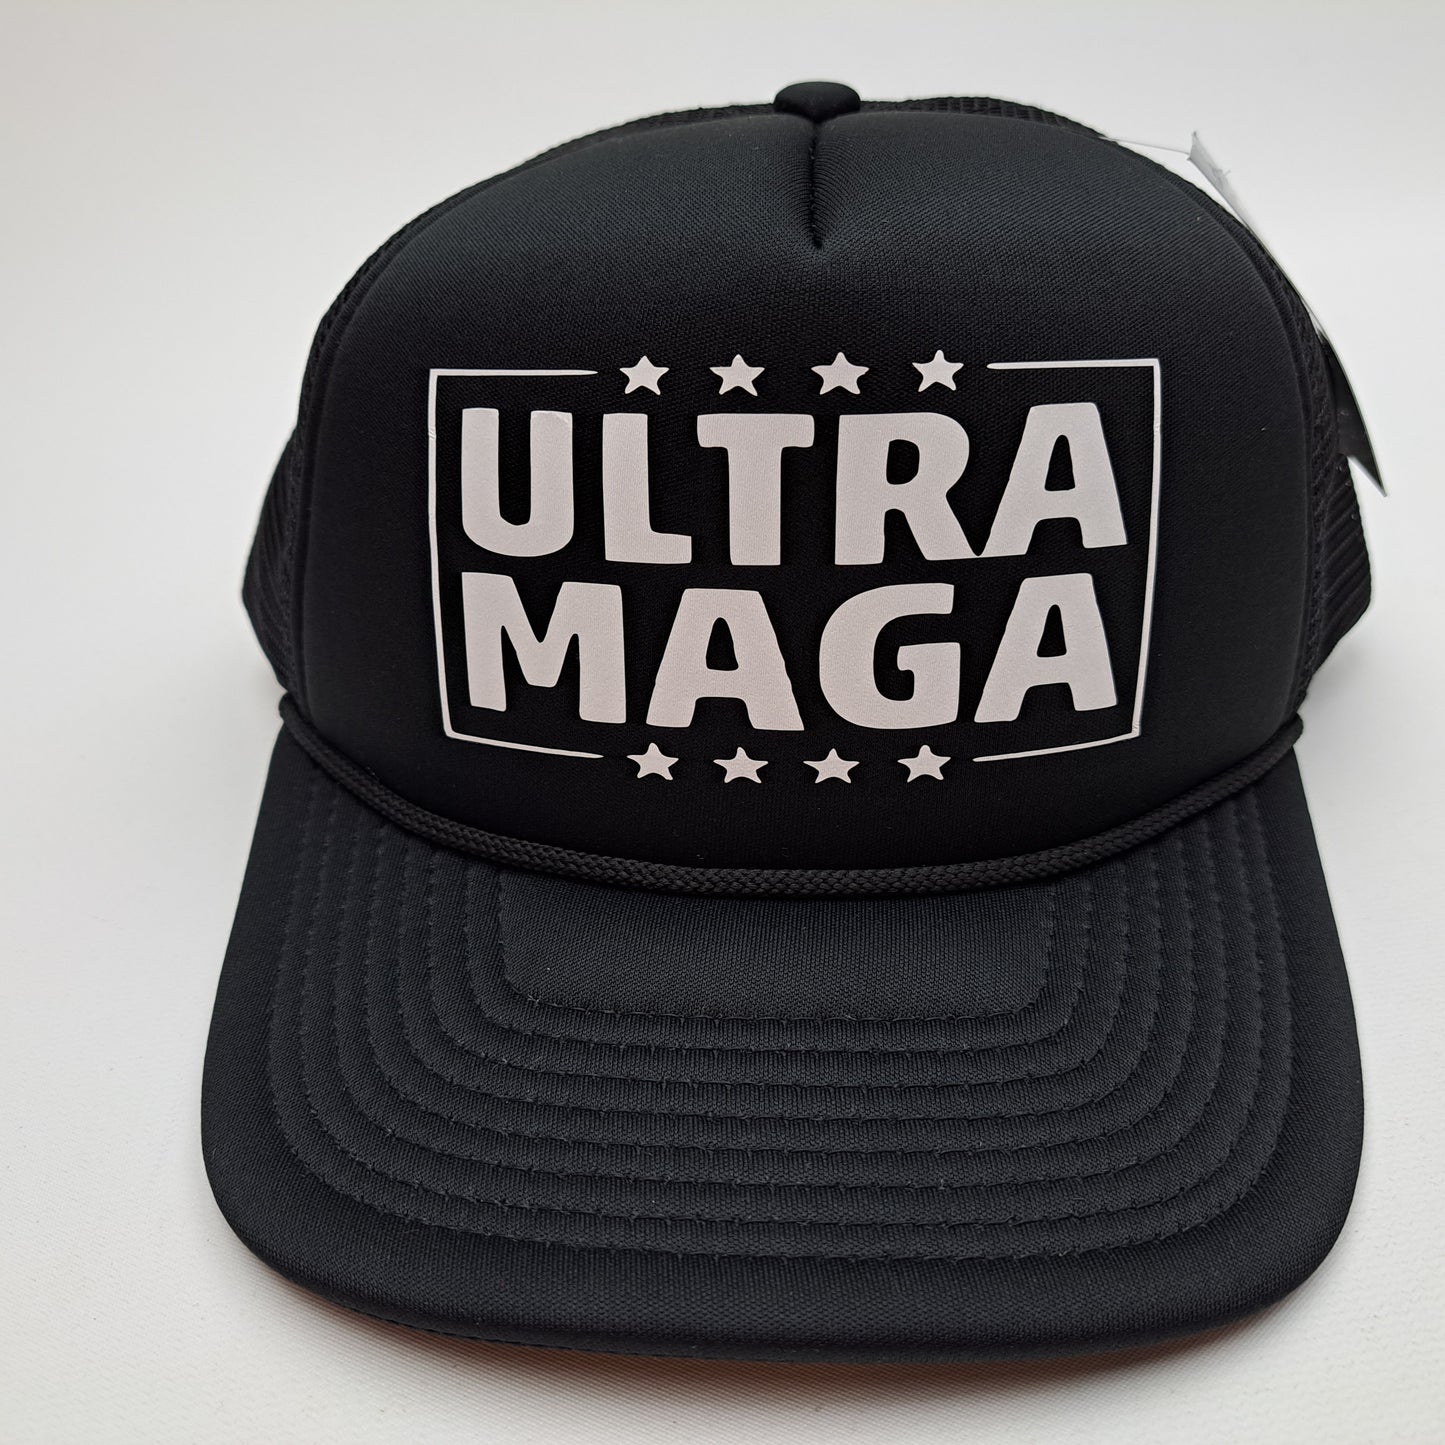 Ultra MAGA Foam Mesh Vintage Trucker Style Snapback Black